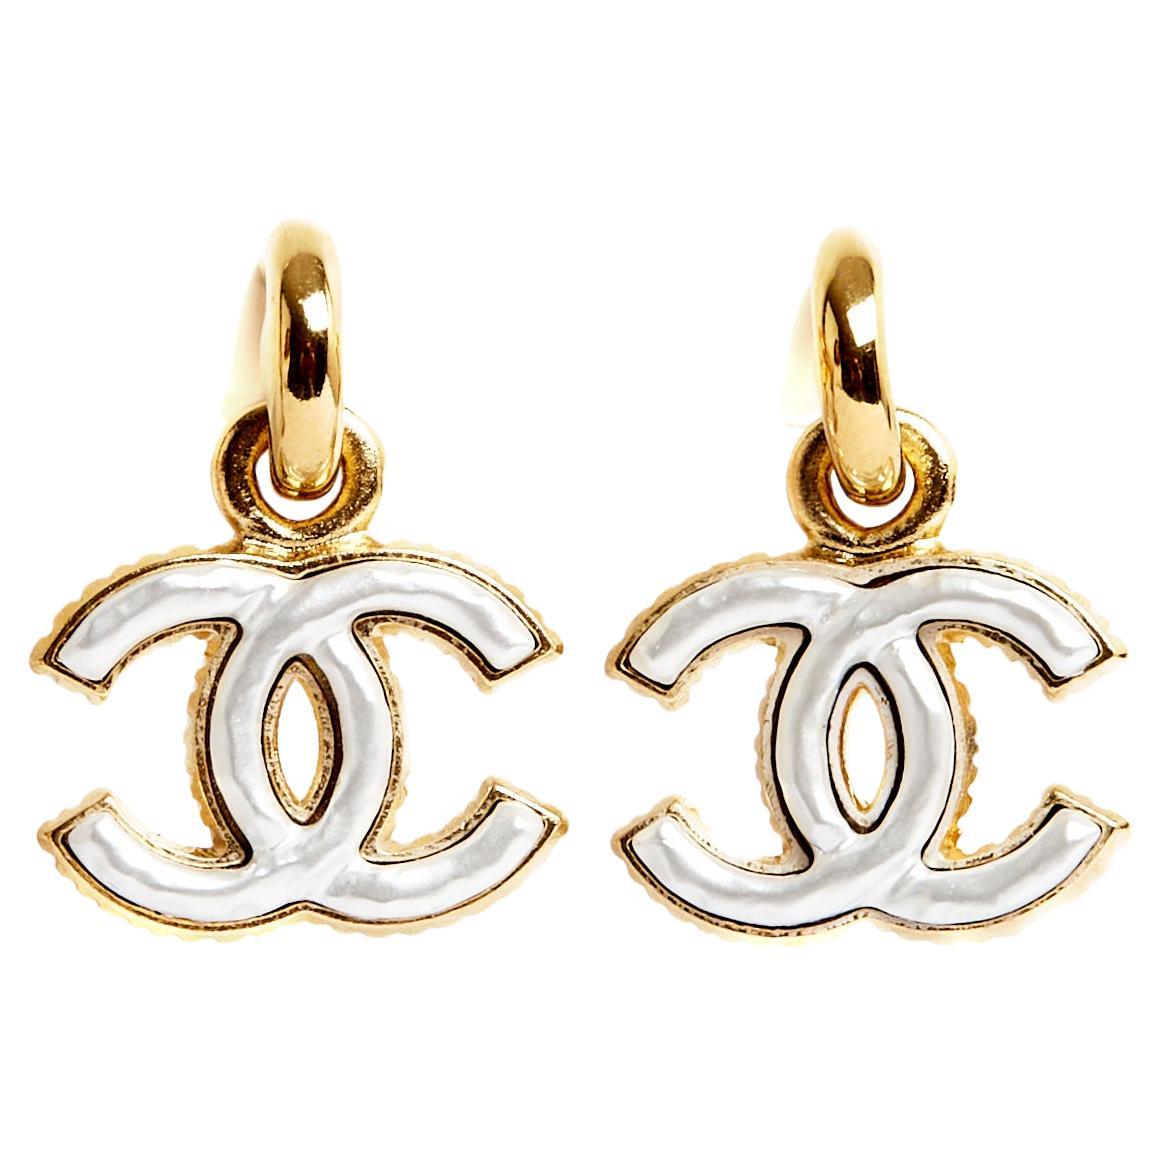 Gripoix Chanel Haute Couture baguette cut strass clips earrings